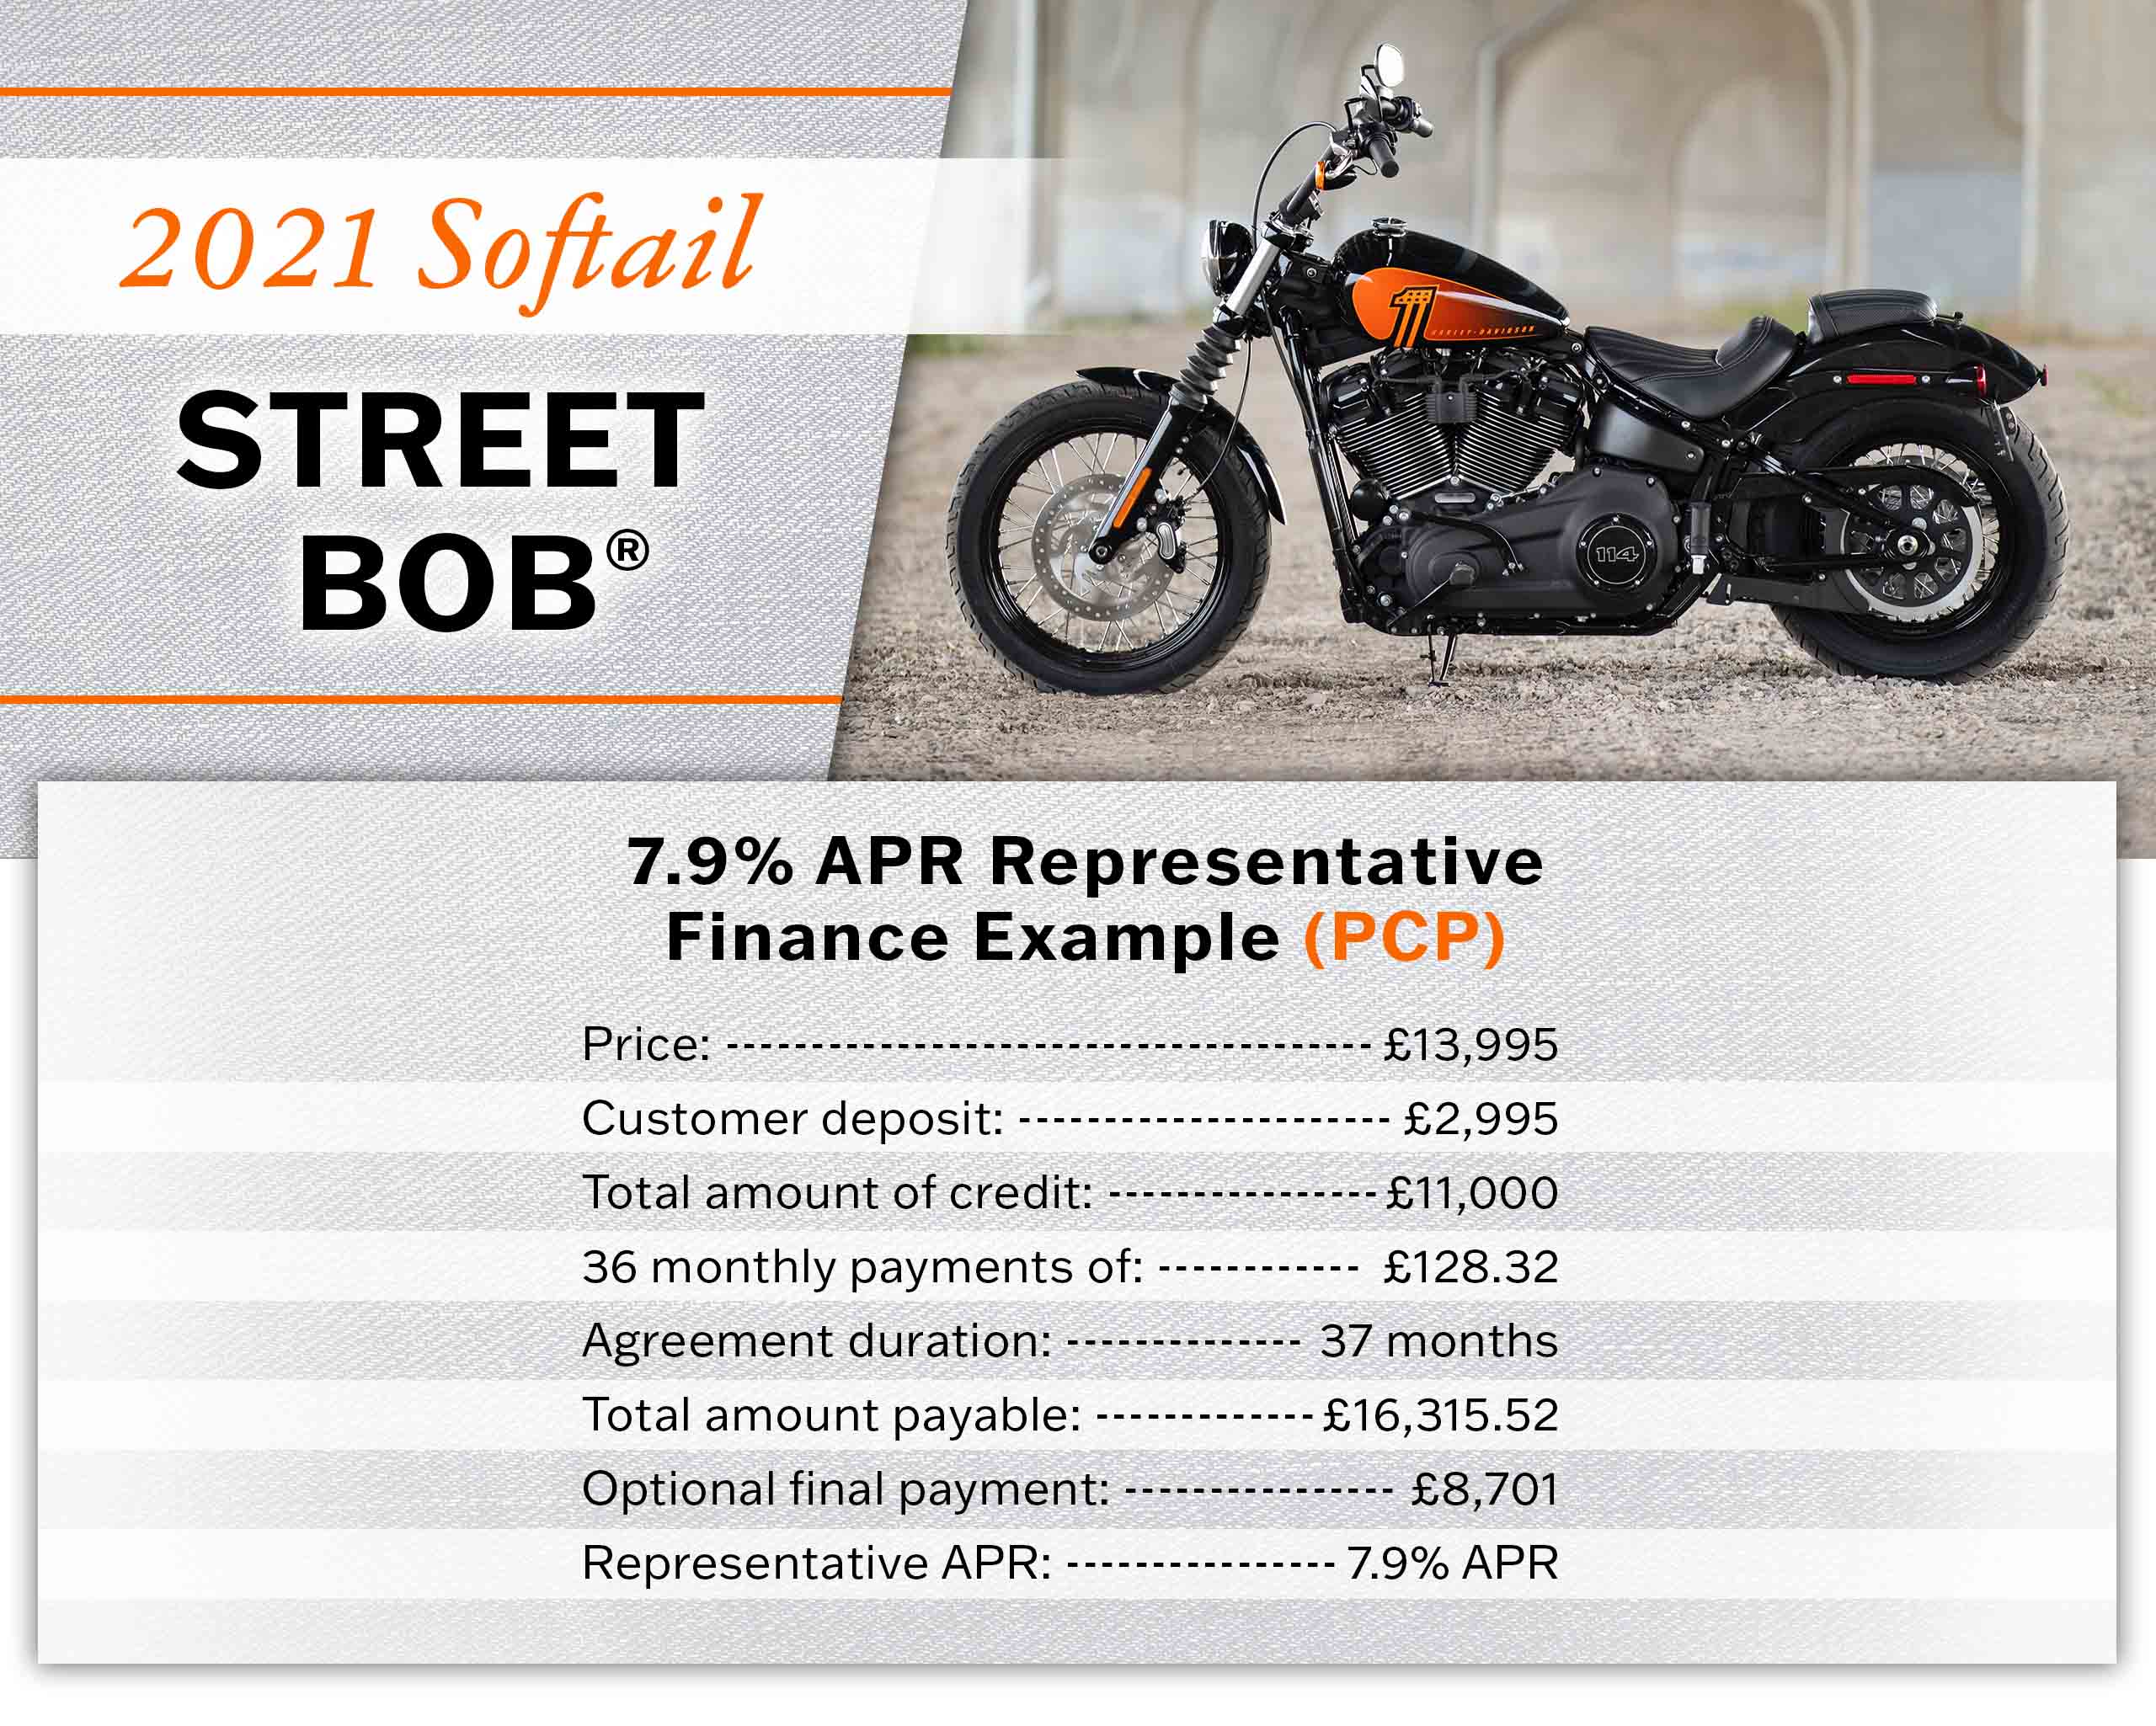 Harley-Davidson Street Bob Finance Example